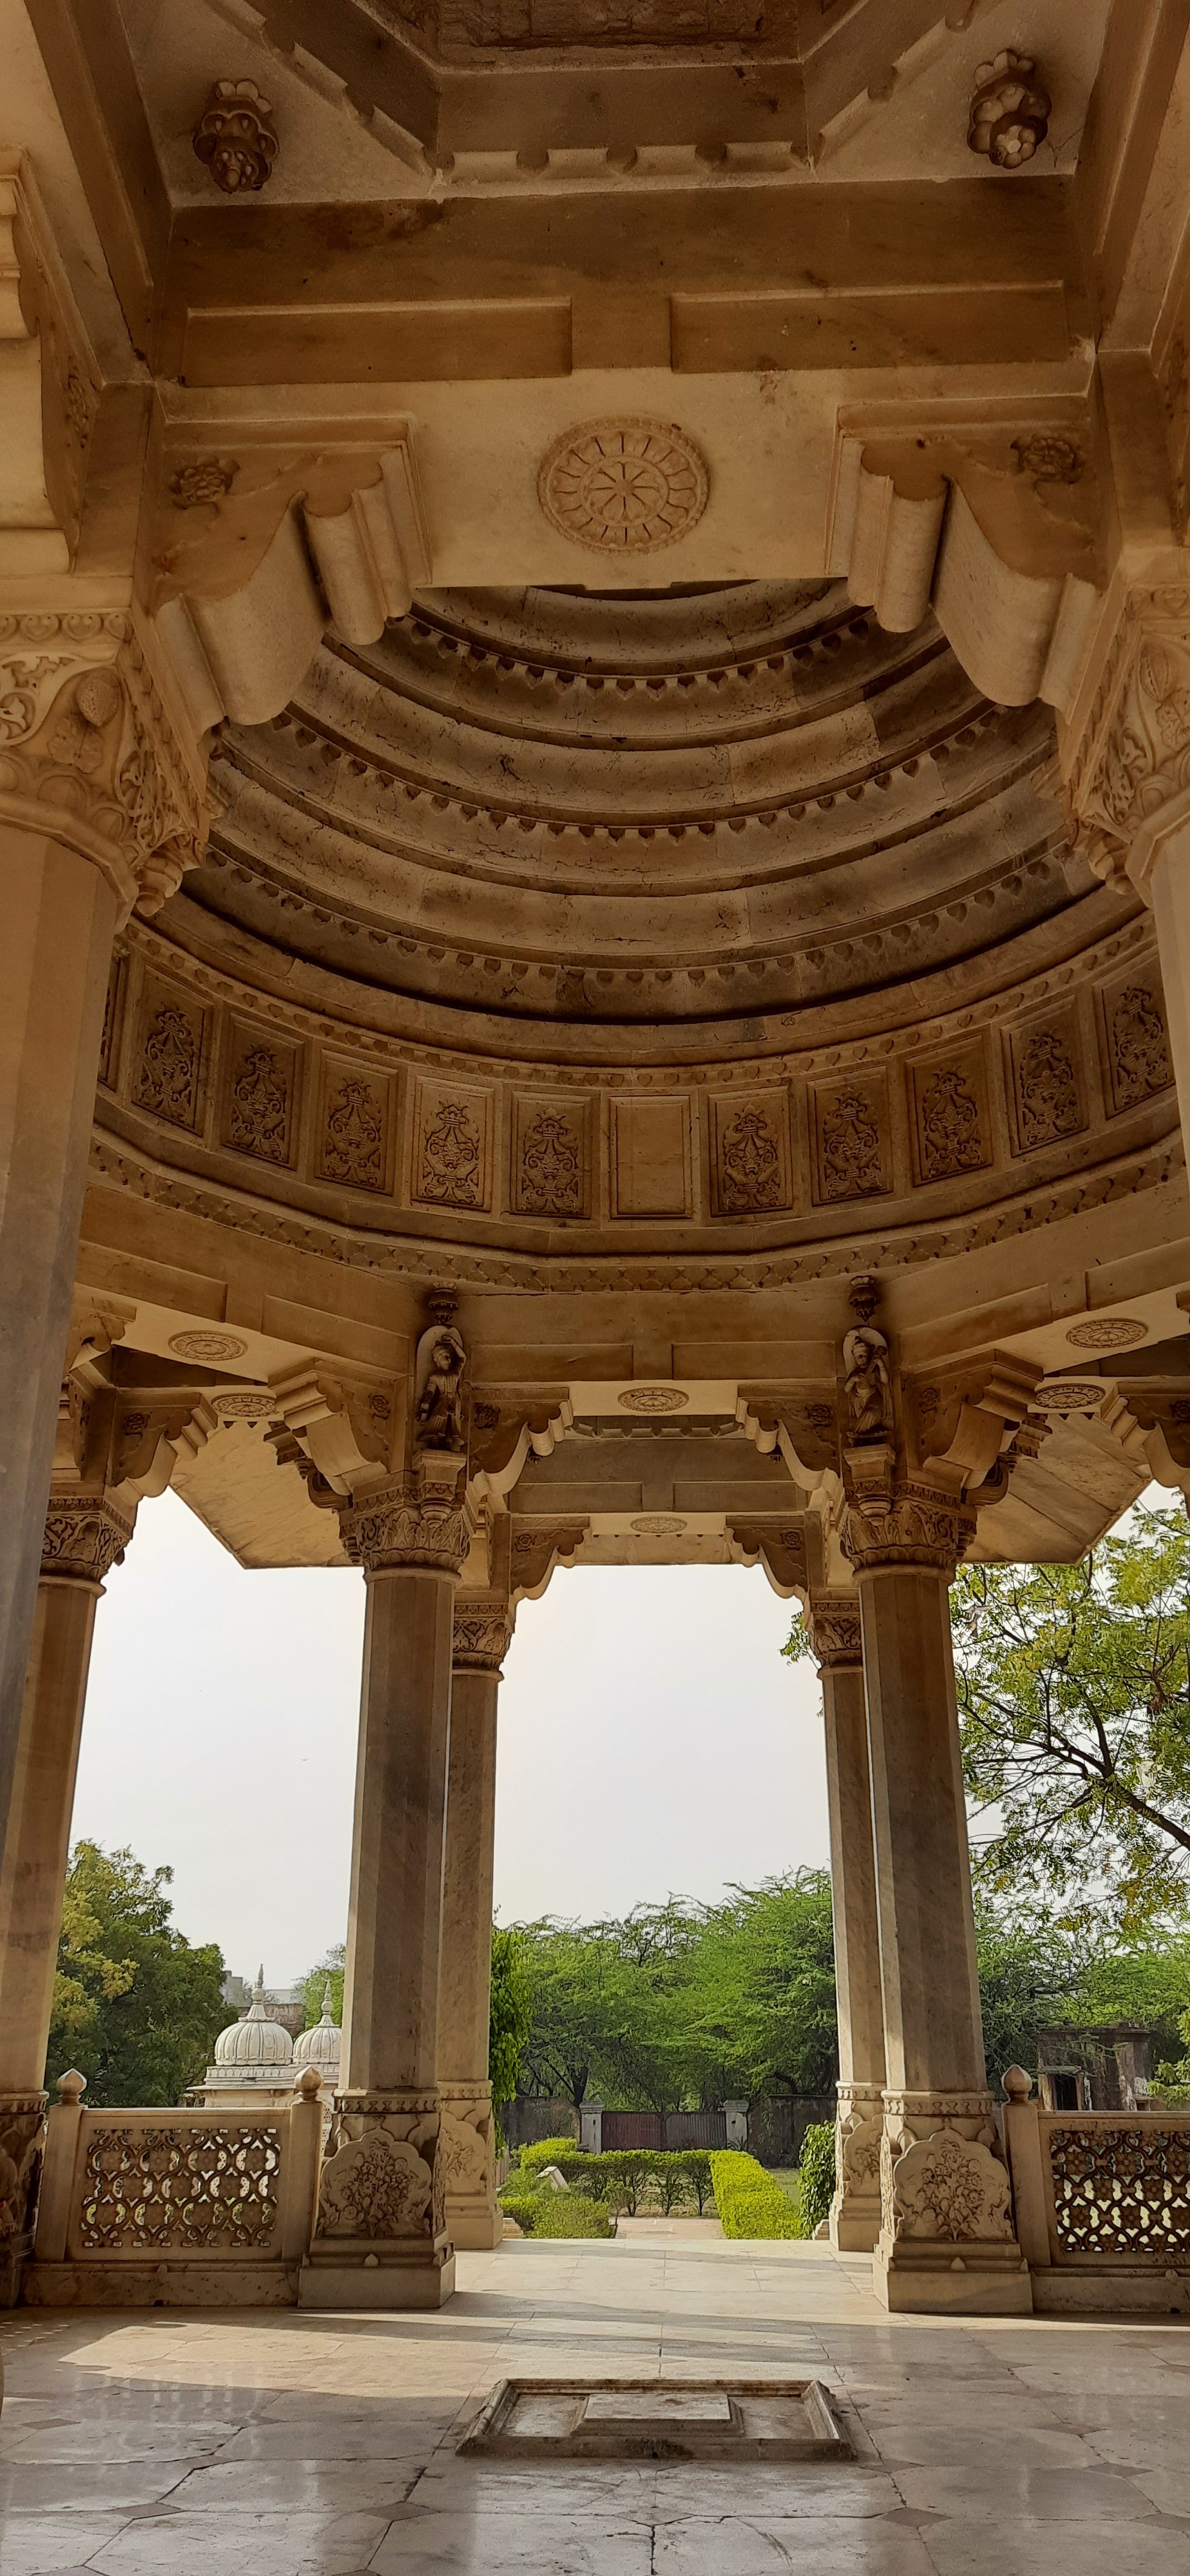 The ornate ceiling of each chhatri